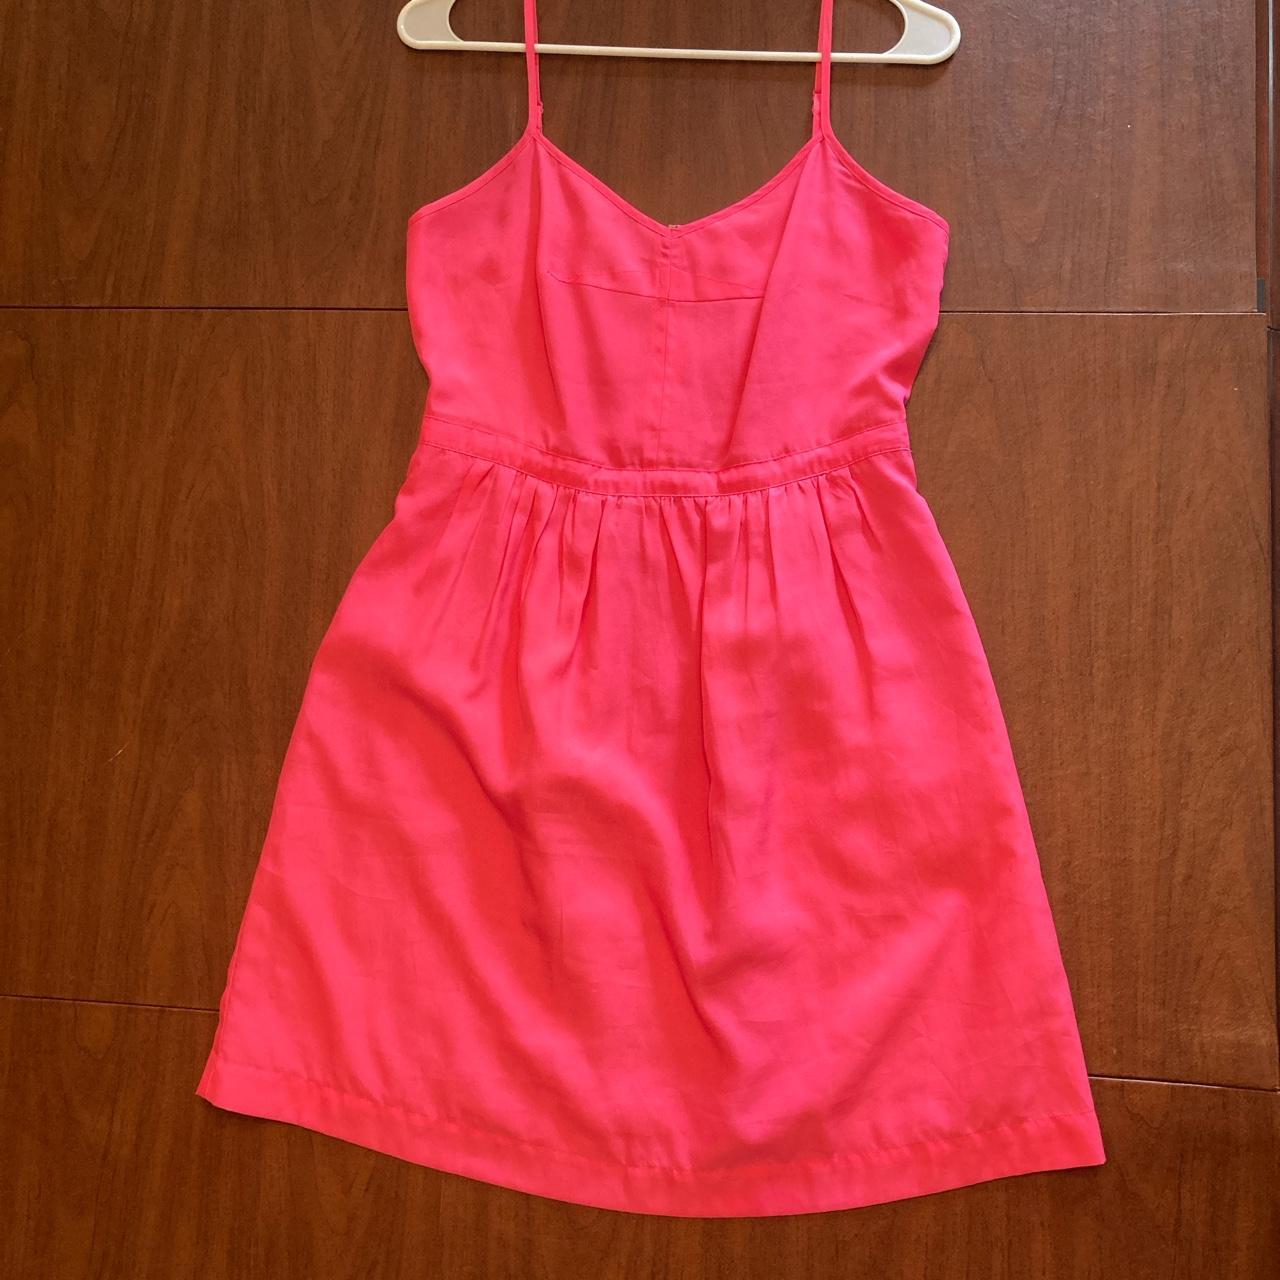 J.Crew Women's Pink Dress | Depop